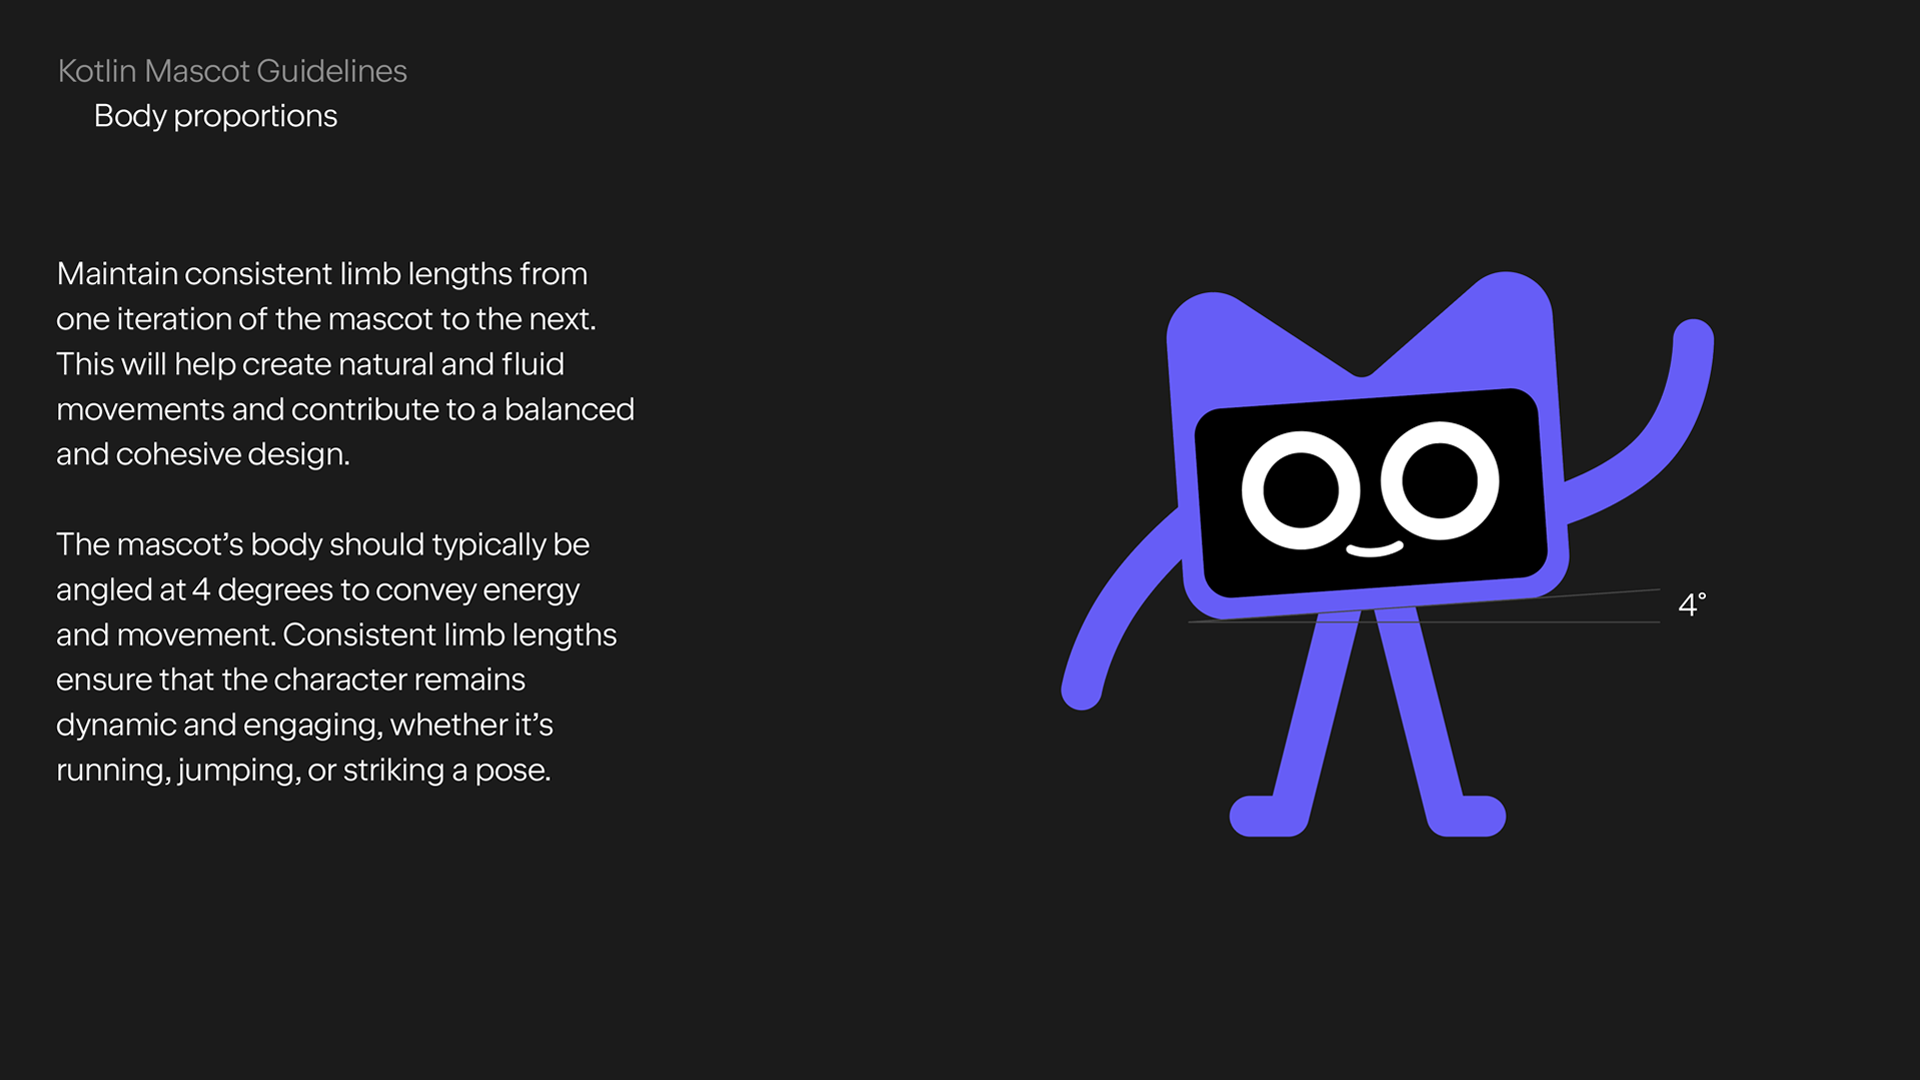 Kotlin mascot Kodee proportions